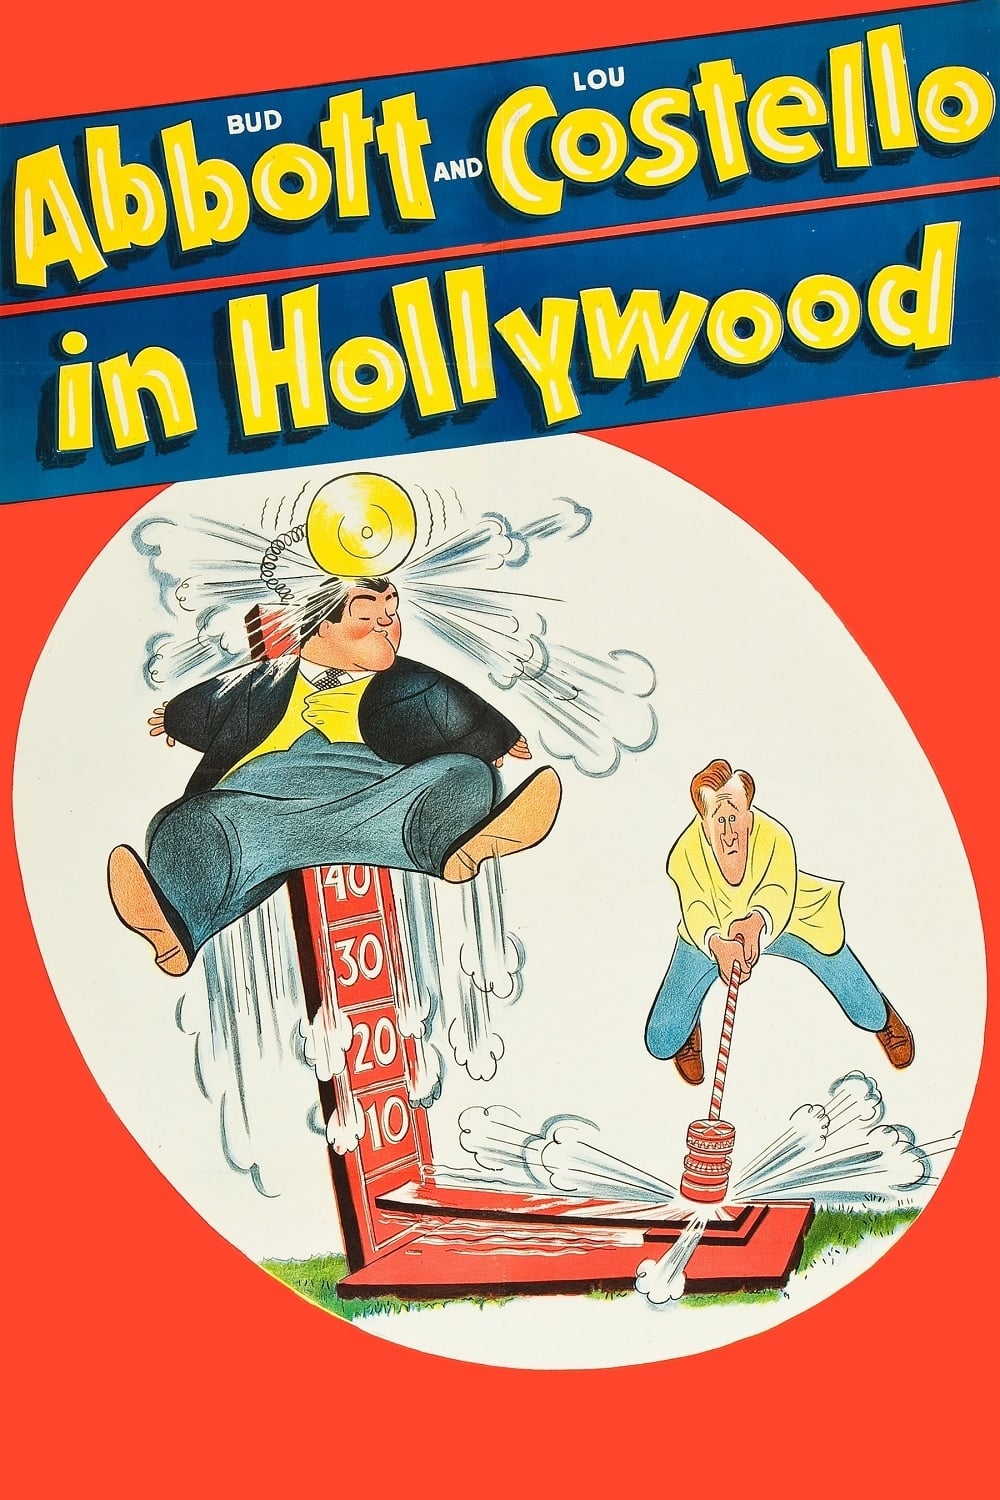 Abbott y Costello en Hollywood (1945)